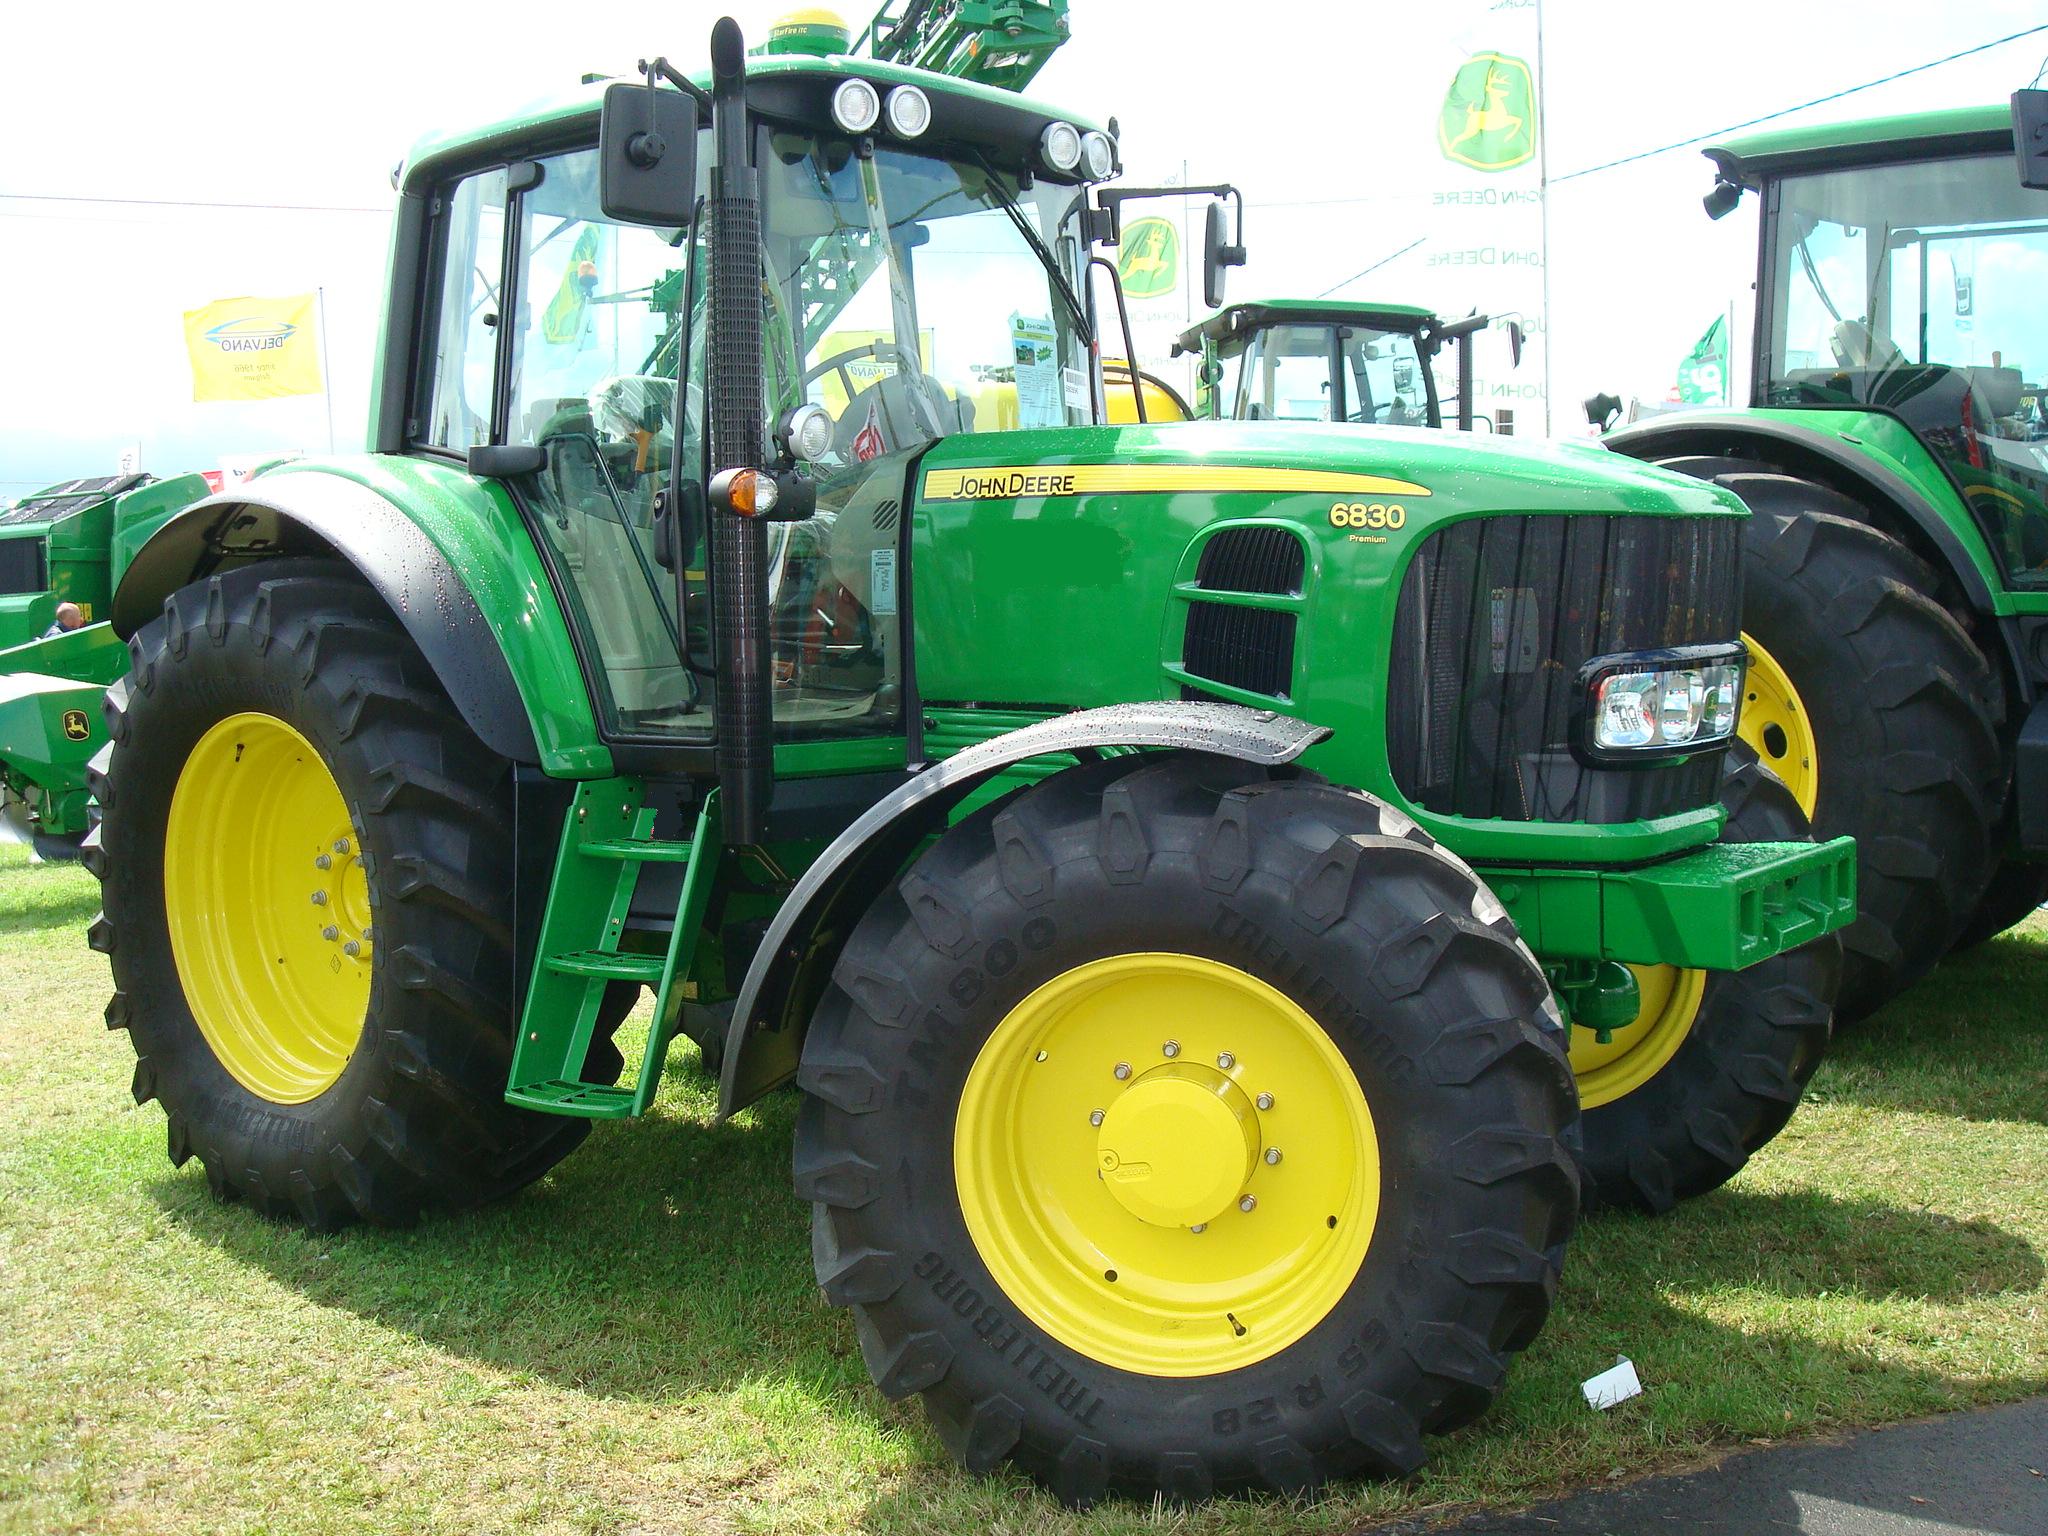 File:Traktor John Deere 6830 Premium.JPG - Wikimedia Commons